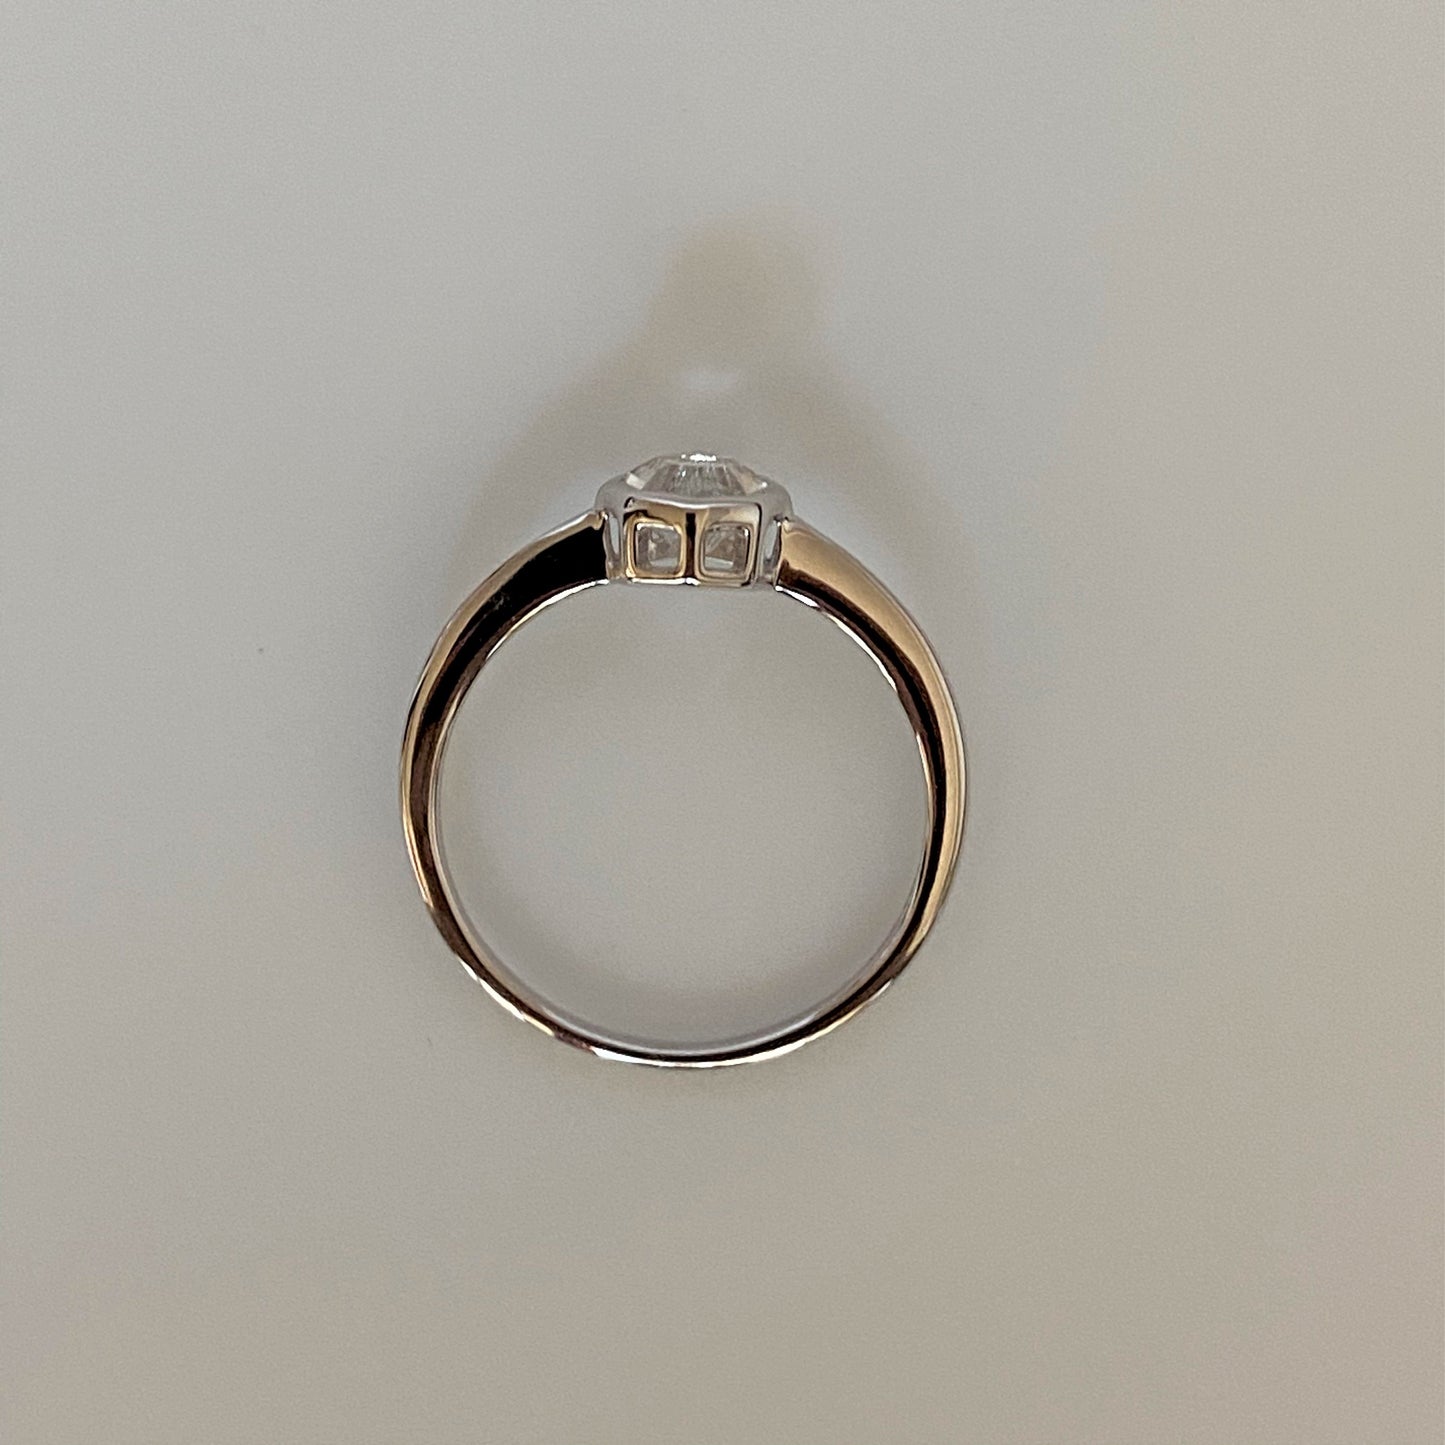 FARA Bezel Set White Topaz Engagement / Promise / Stackable Ring Sterling Silver